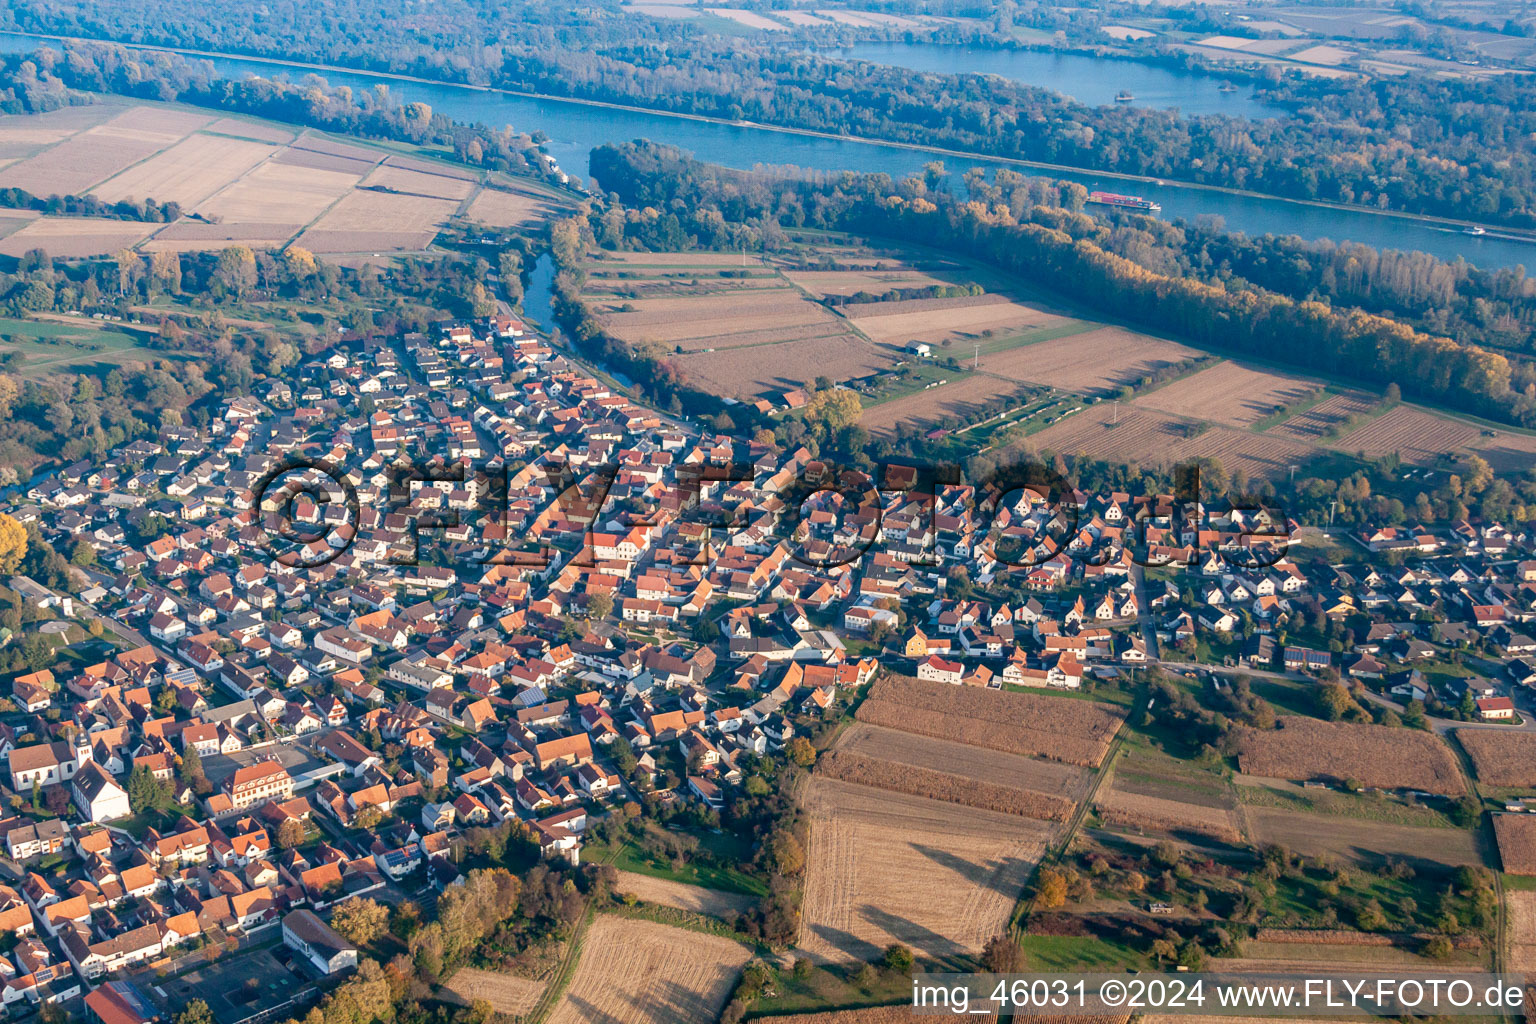 Drone recording of Neuburg am Rhein in the state Rhineland-Palatinate, Germany